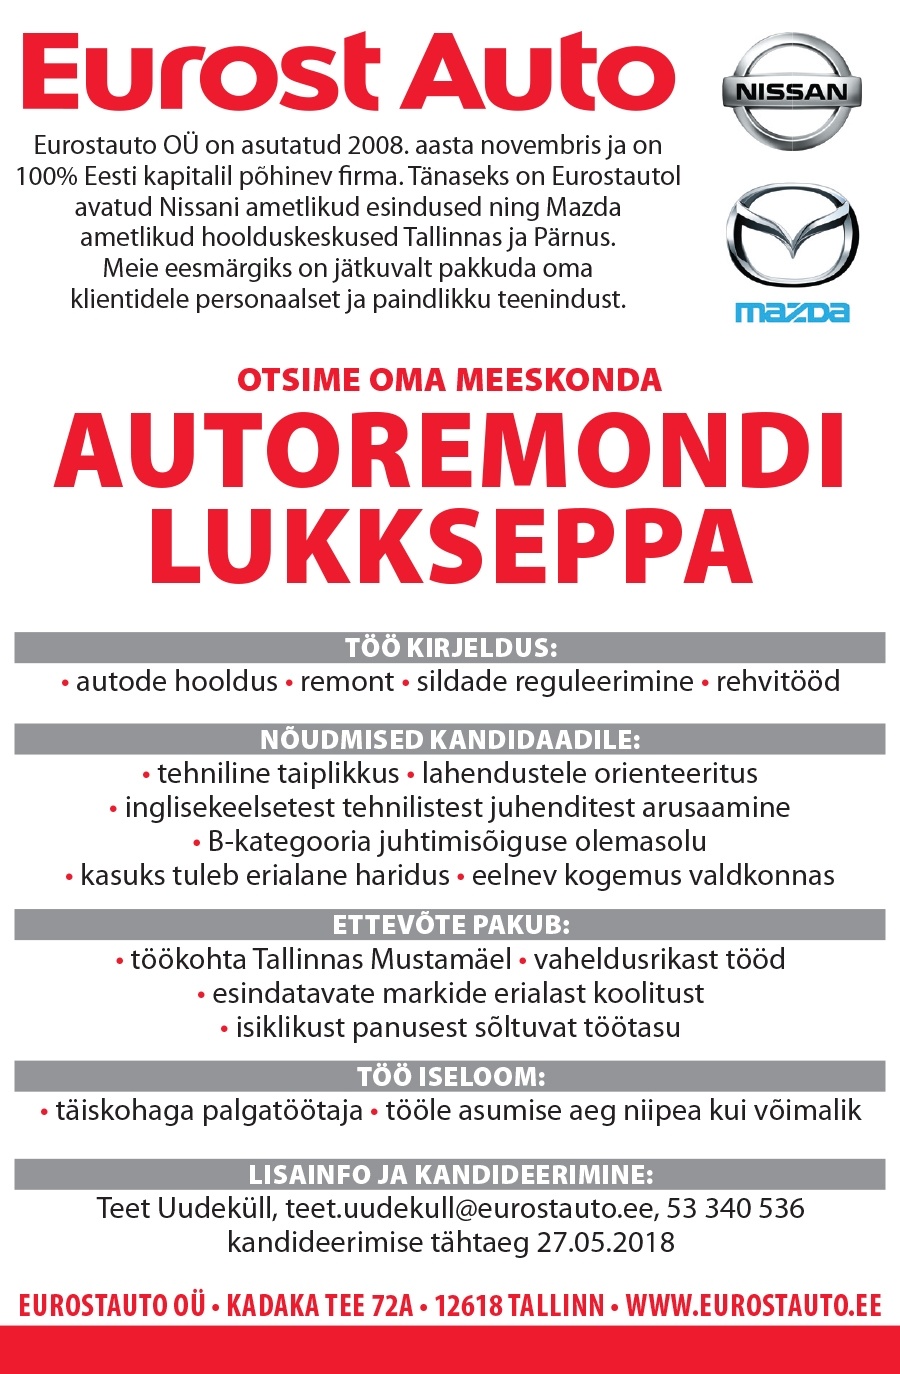 Eurostauto OÜ Autoremondi lukksepp